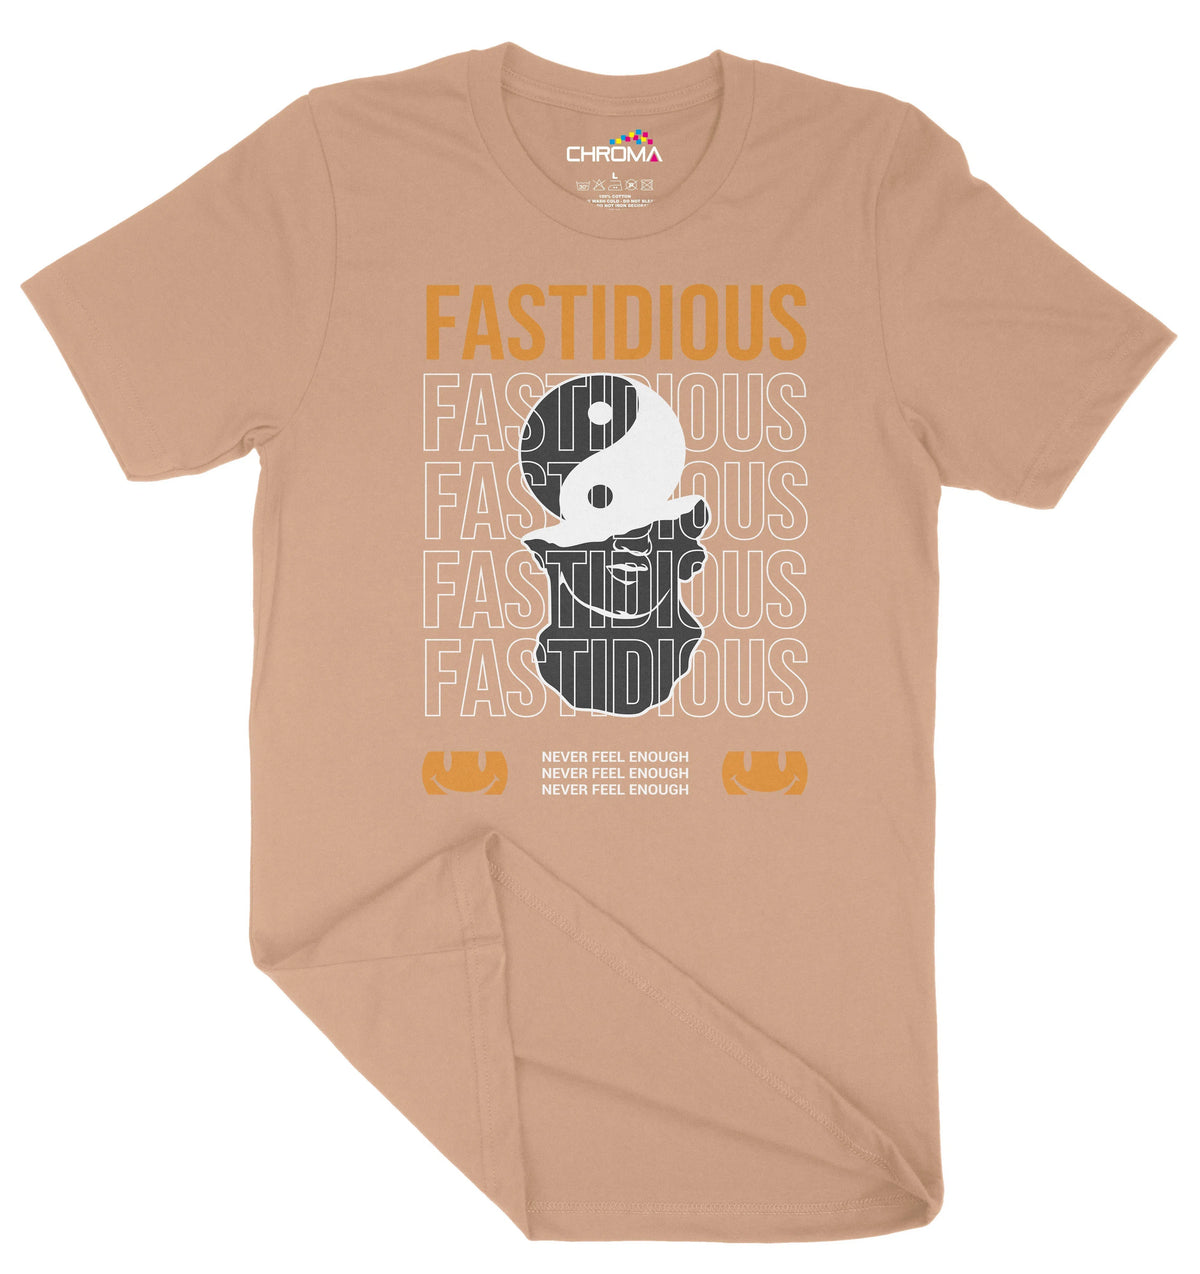 Fastidious Unisex Adult T-Shirt | Premium Quality Streetwear Chroma Clothing